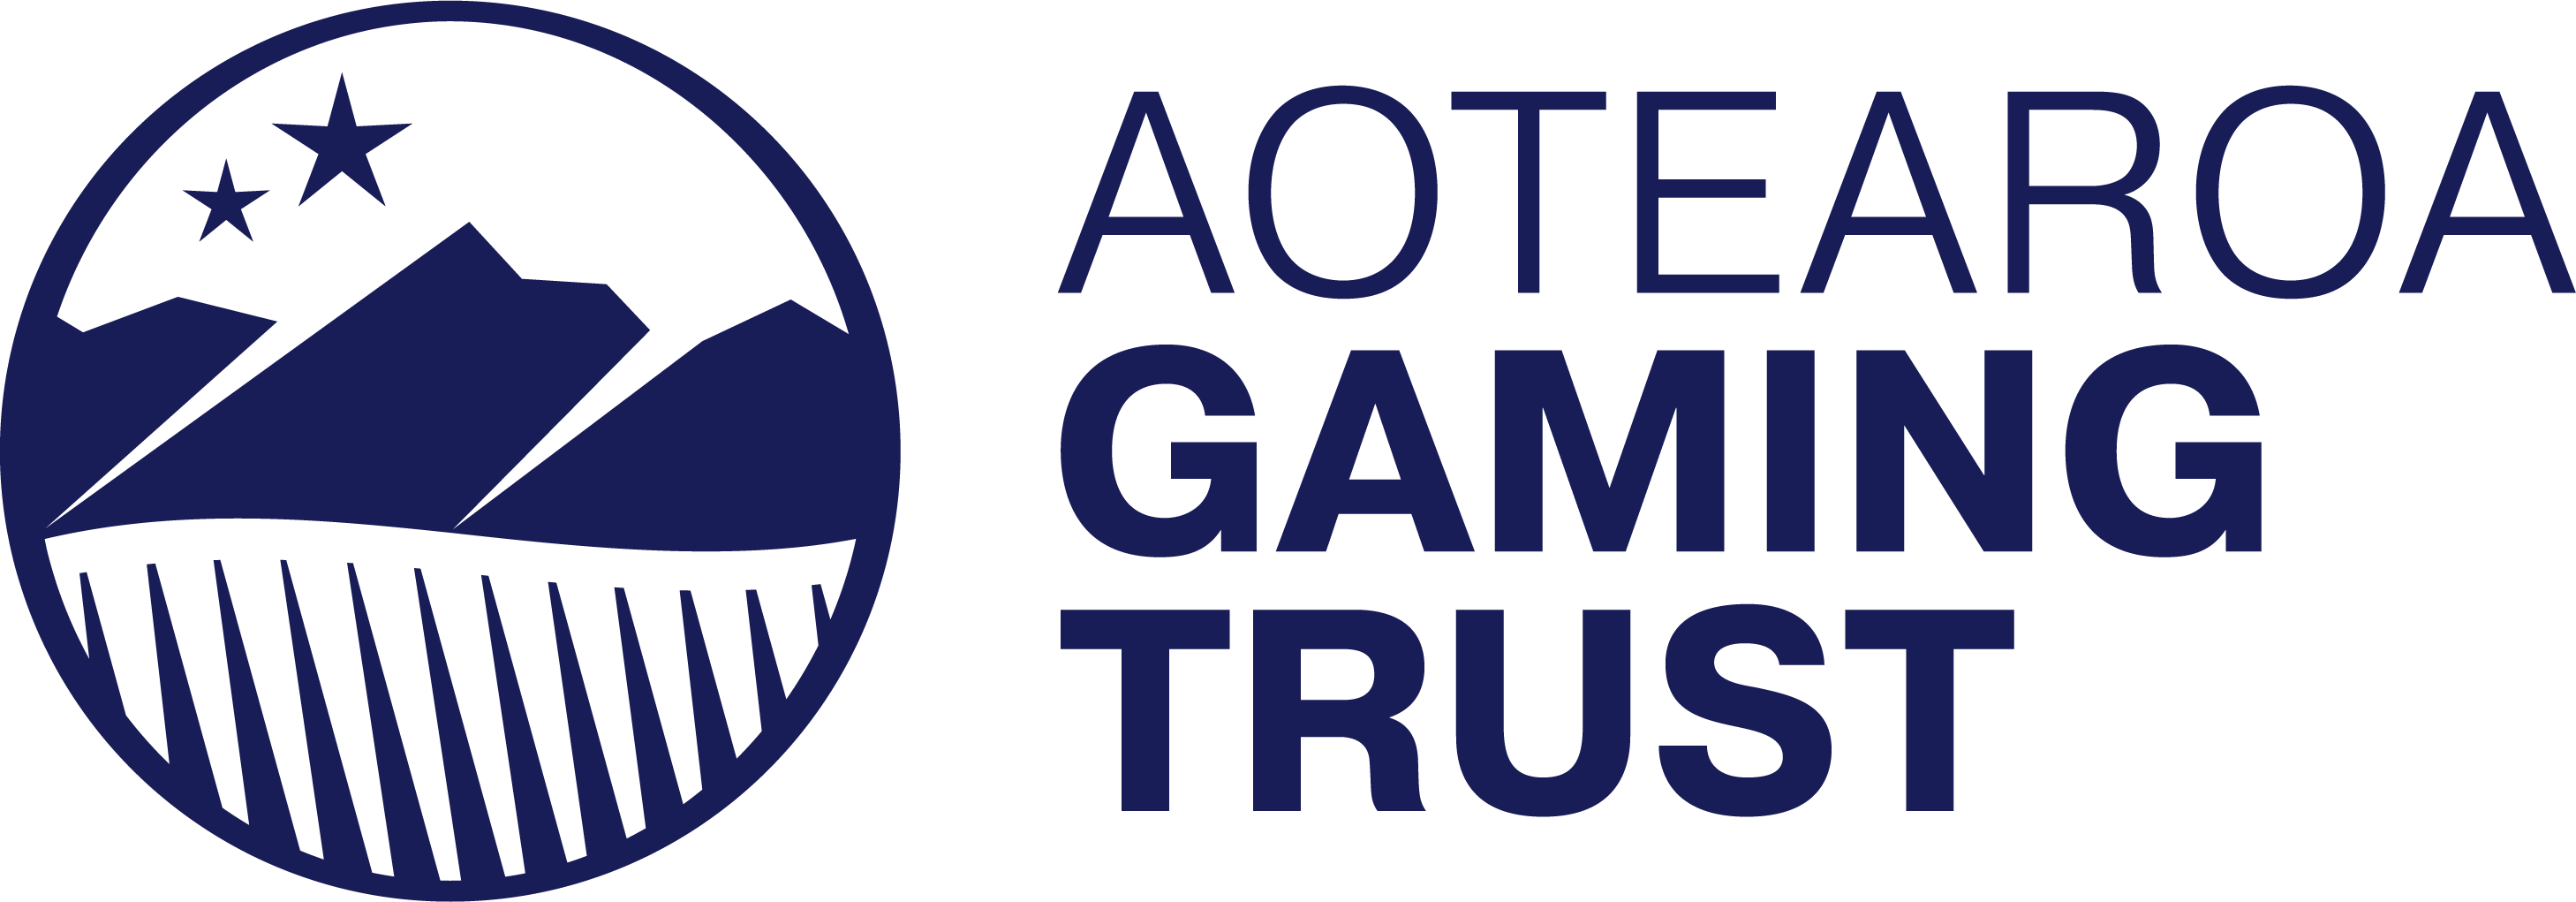 Aotearoa Gaming Trust - DARK BLUE